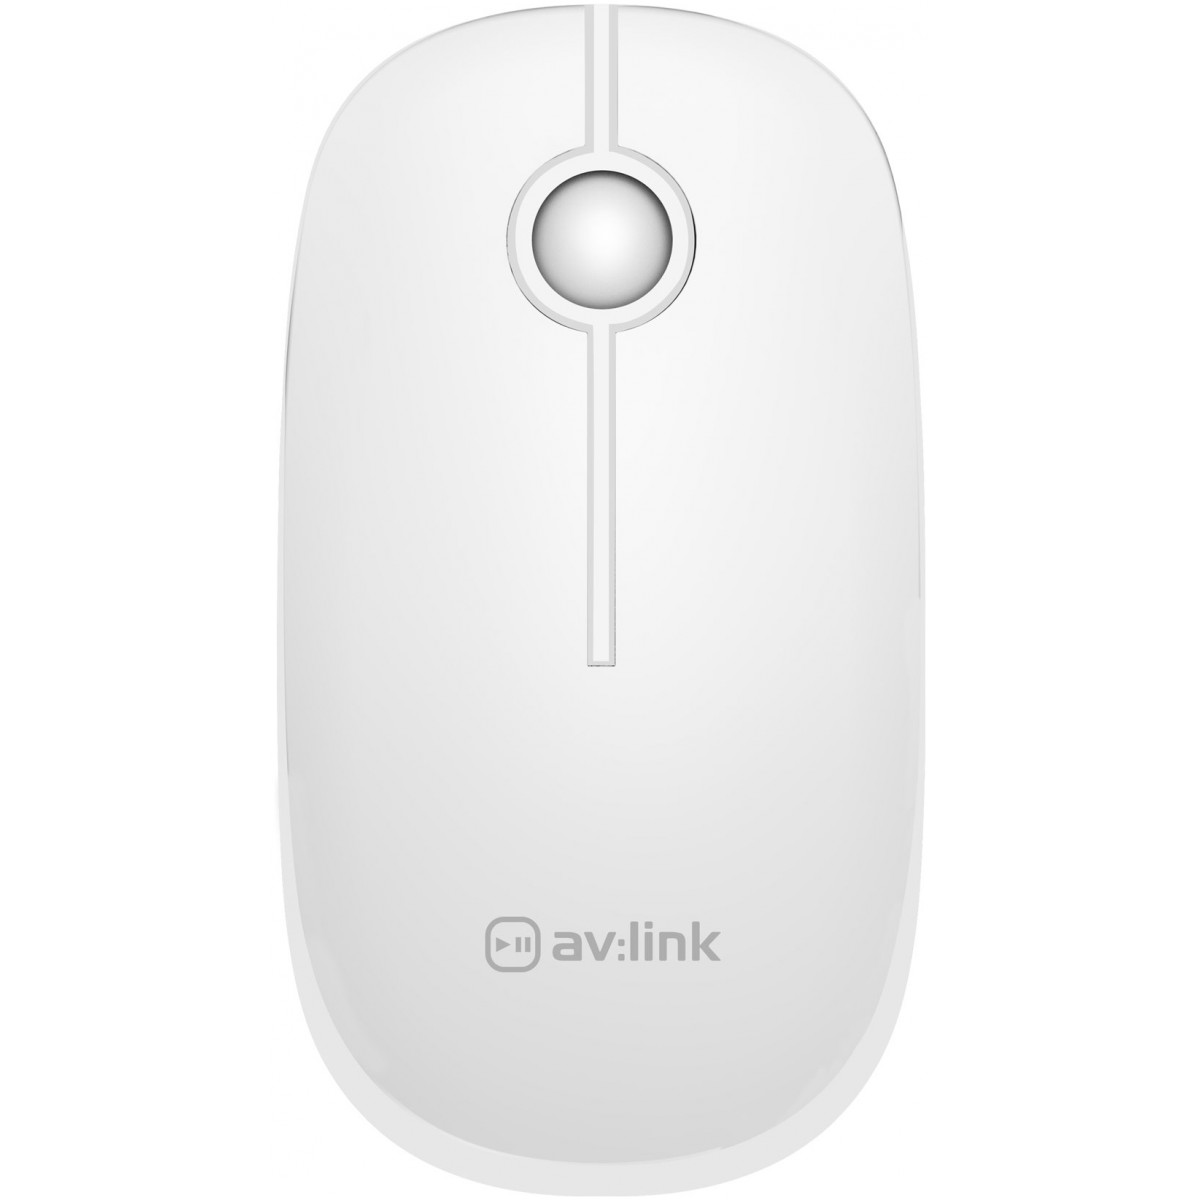 AV:Link 2.4G Bezdrátová myš s USB, bílá